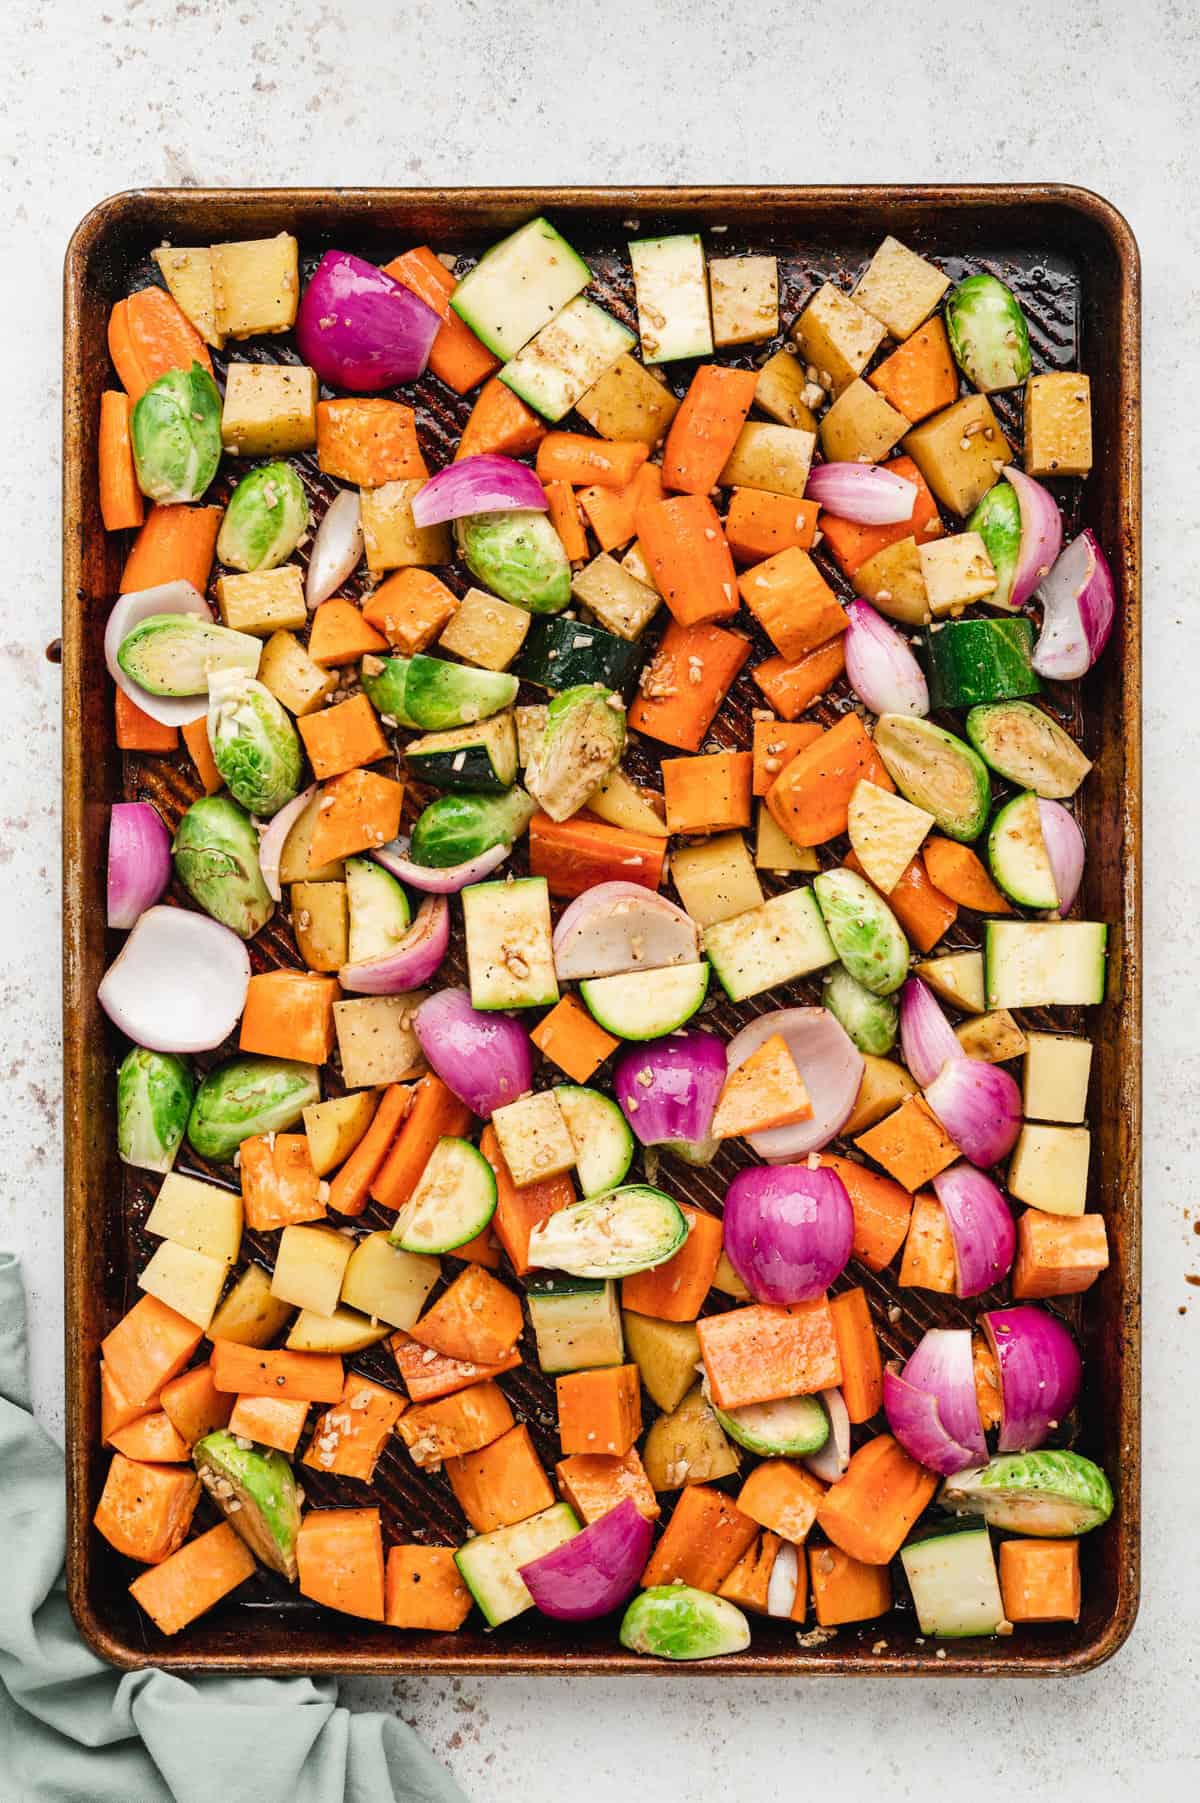 Prepared vegetables tossed and seasoned on baking sheet for Roasted Vegetables recipe